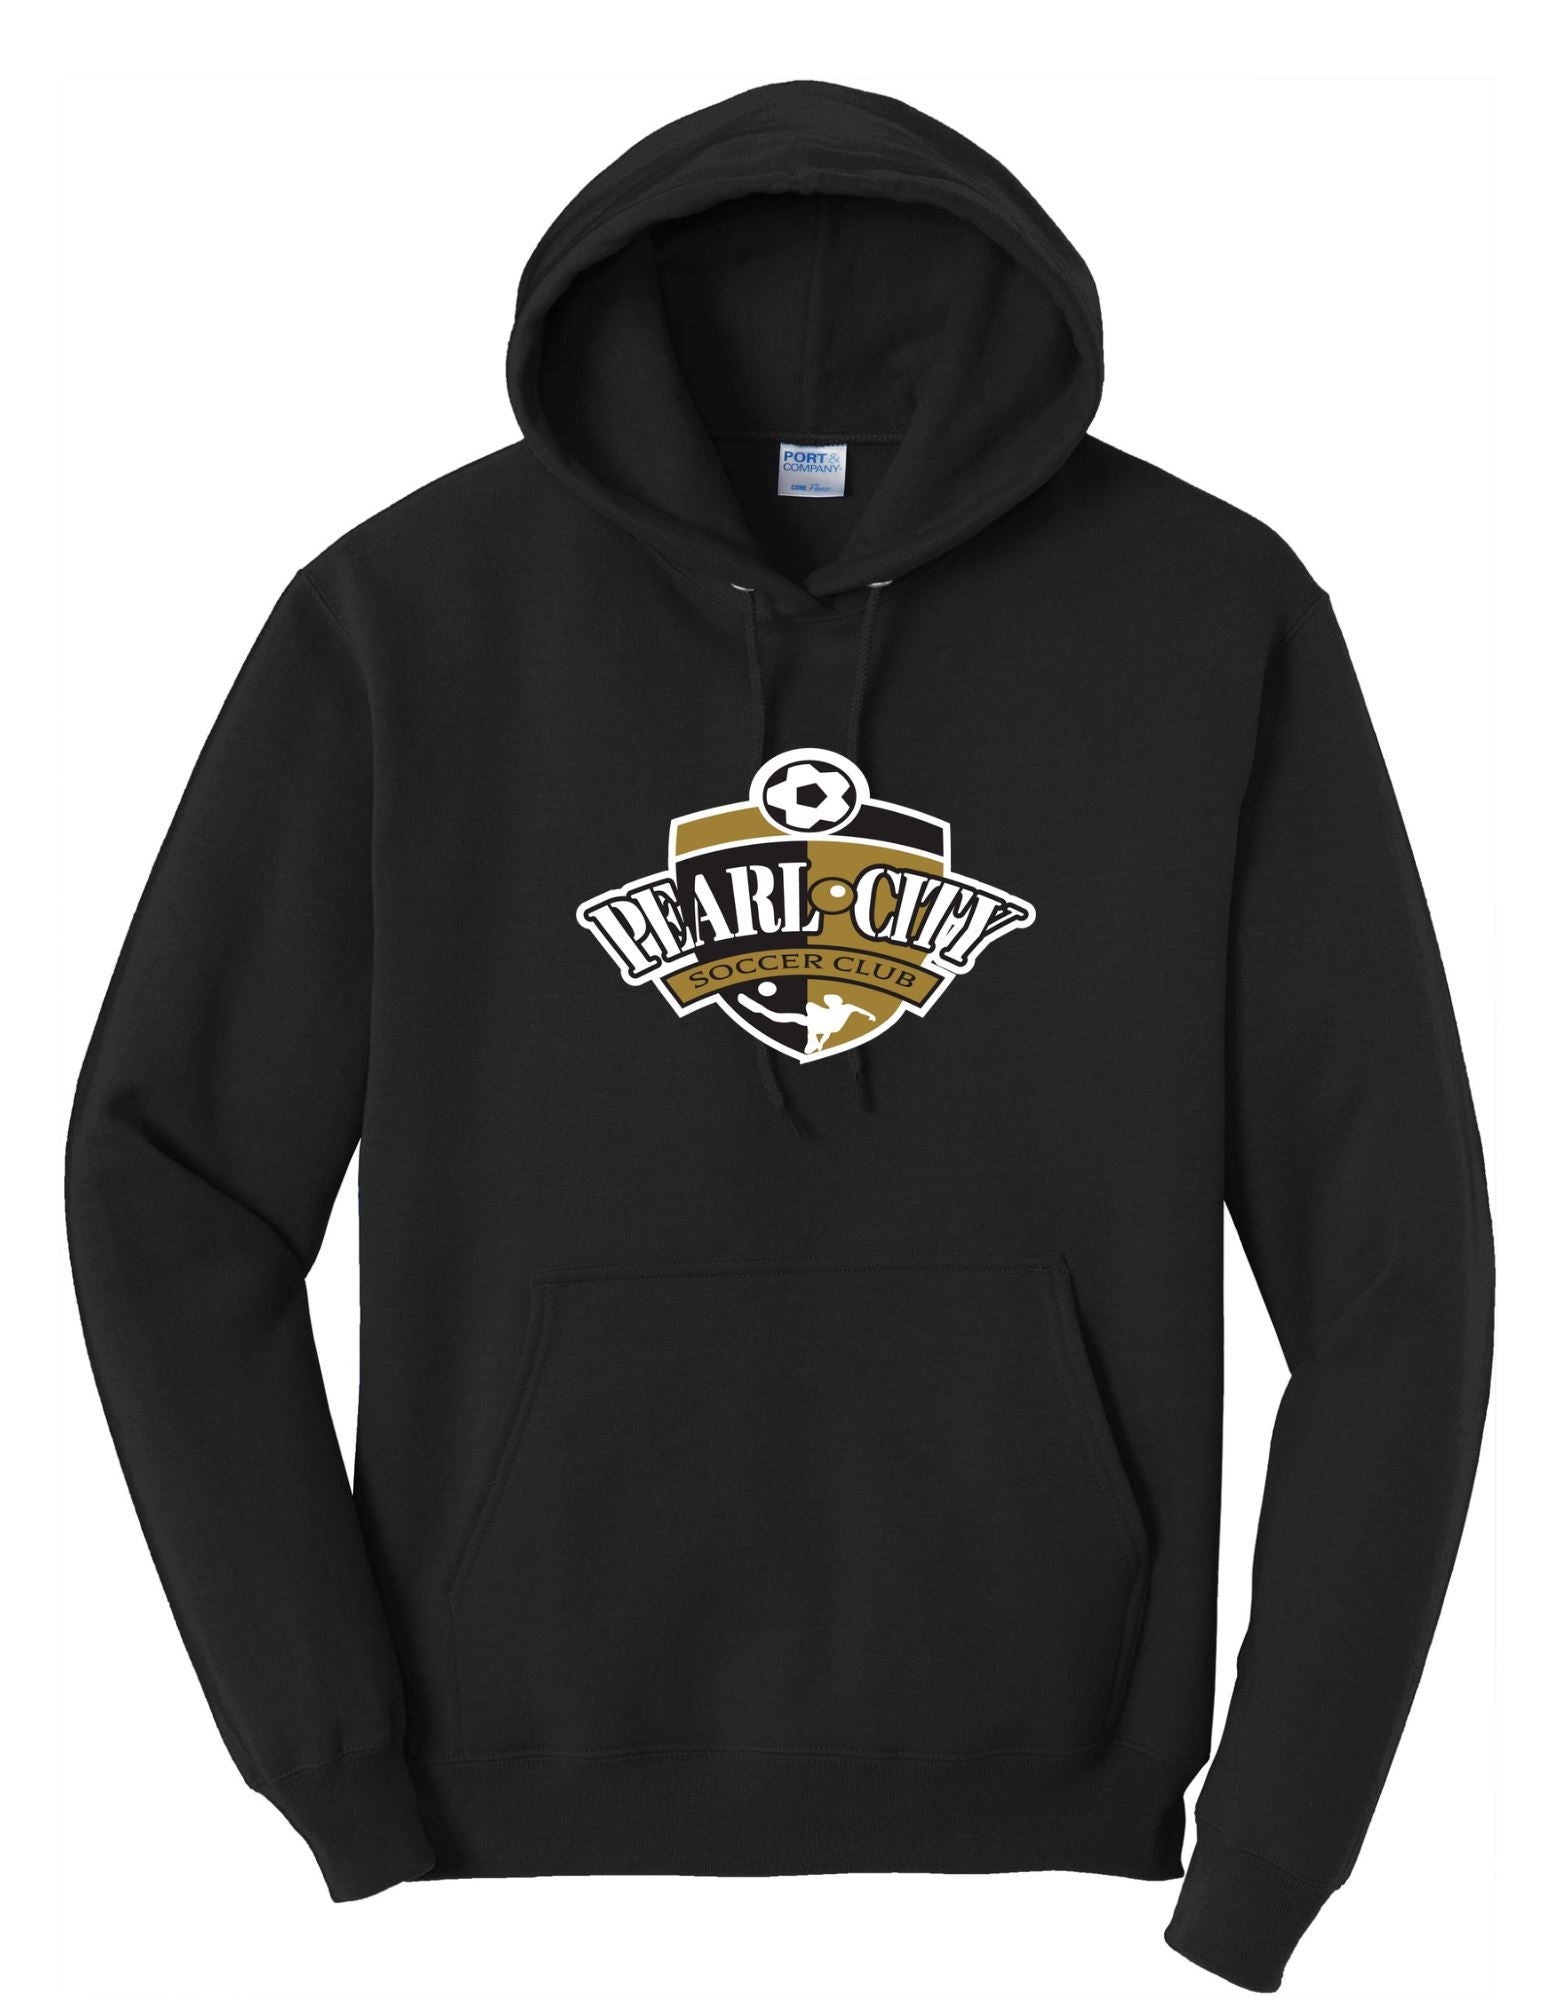 Pearl City Soccer Club Men's Fleece Hooded Sweatshirt Hooded Sweatshirt Goal Kick Soccer Adult X-Small Jet Black 